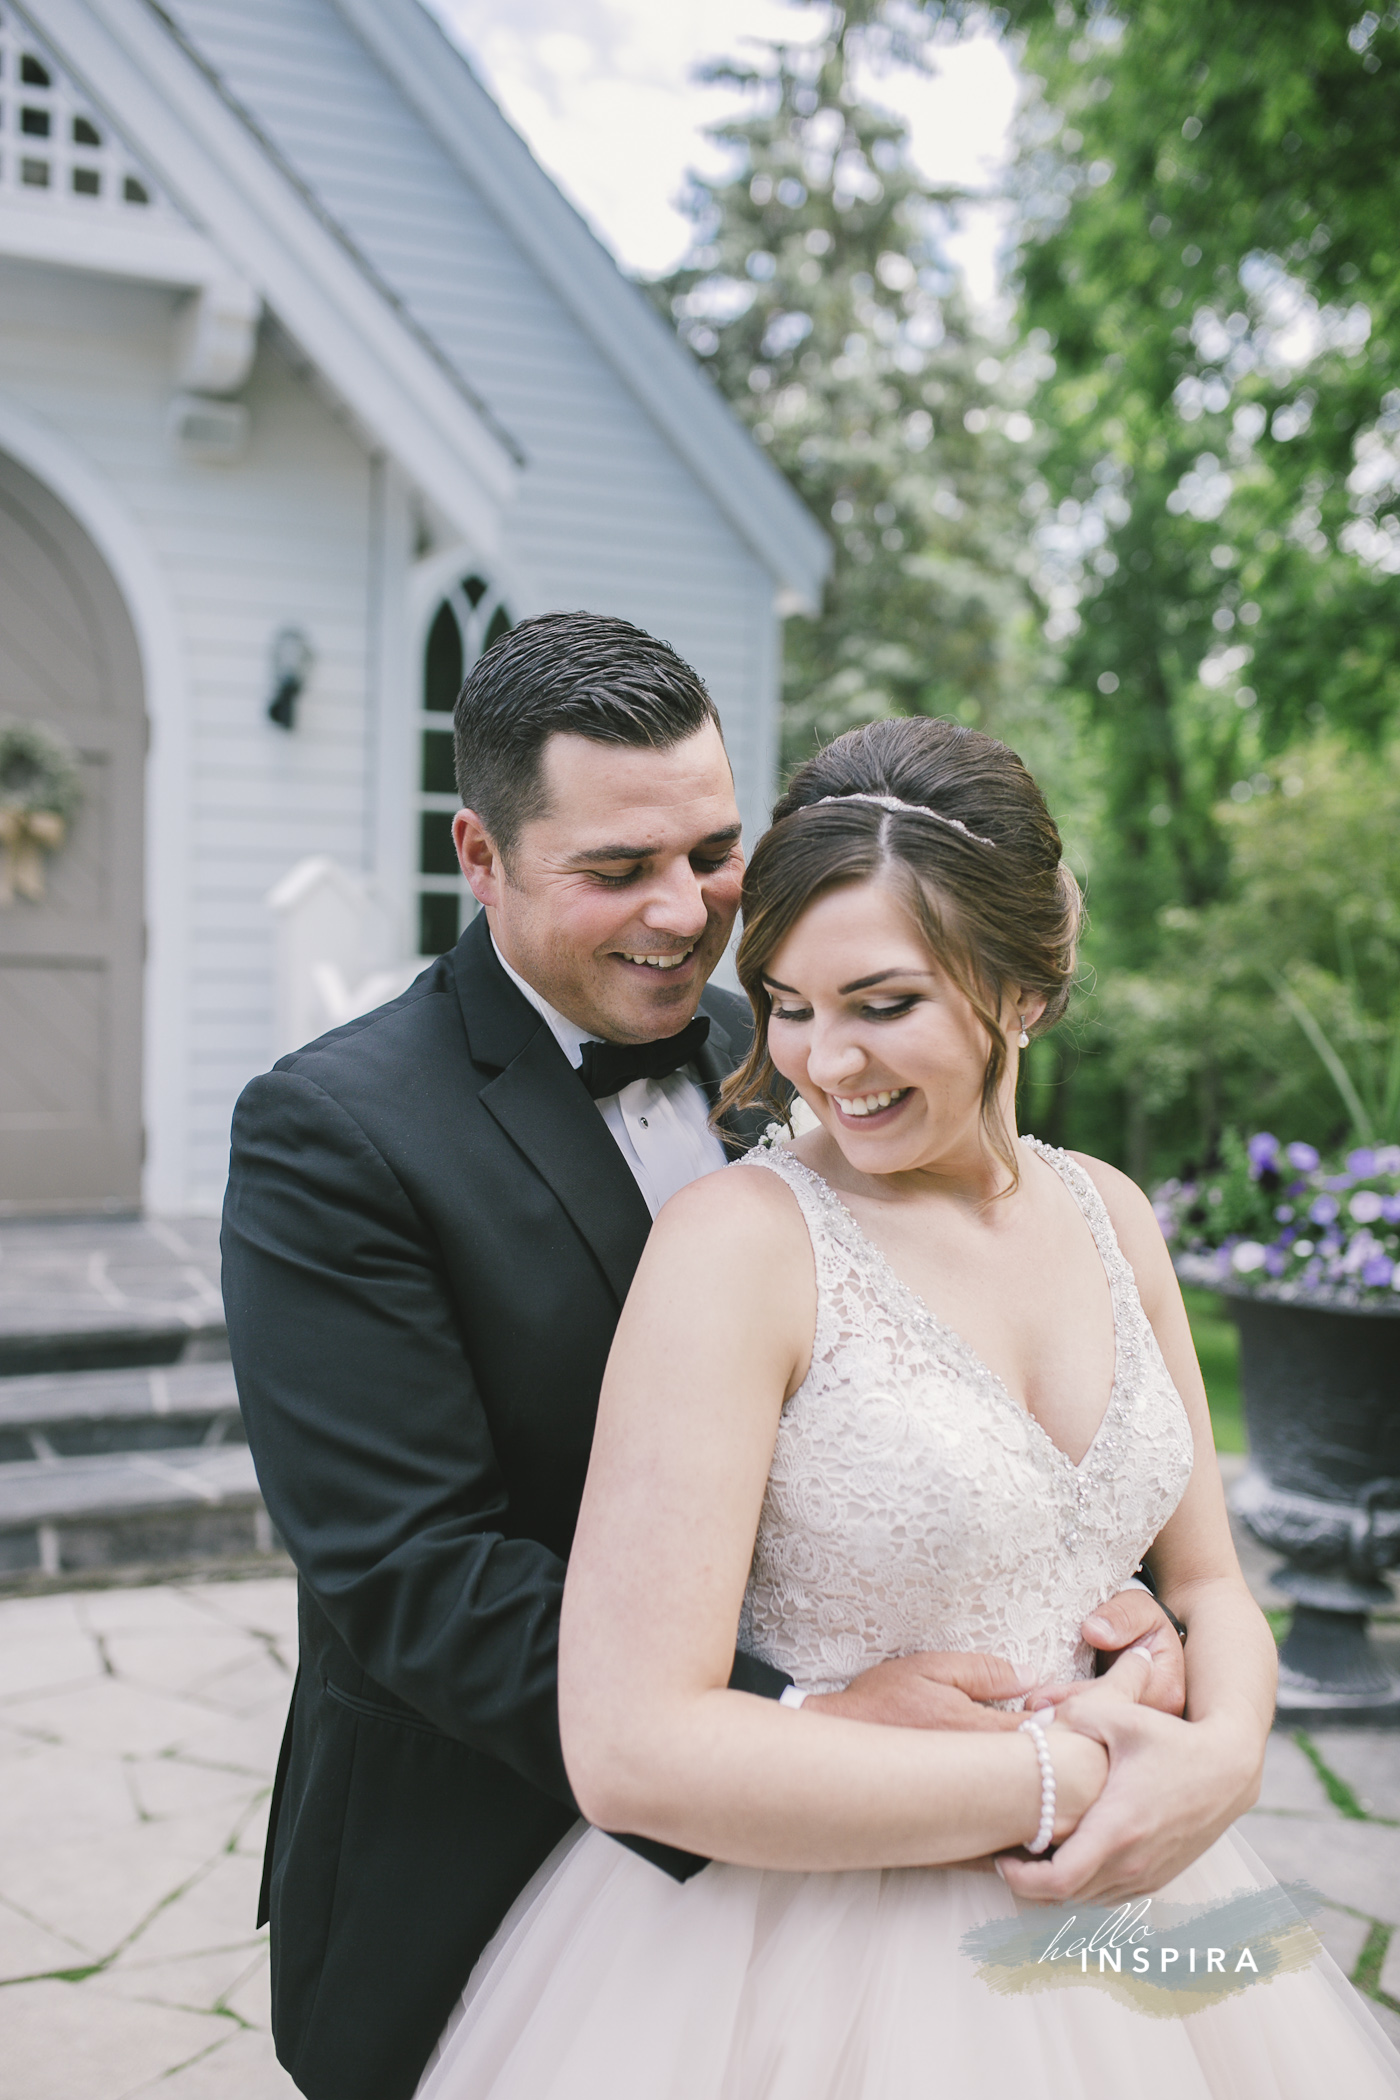 doctor's house wedding photographer hello inspira